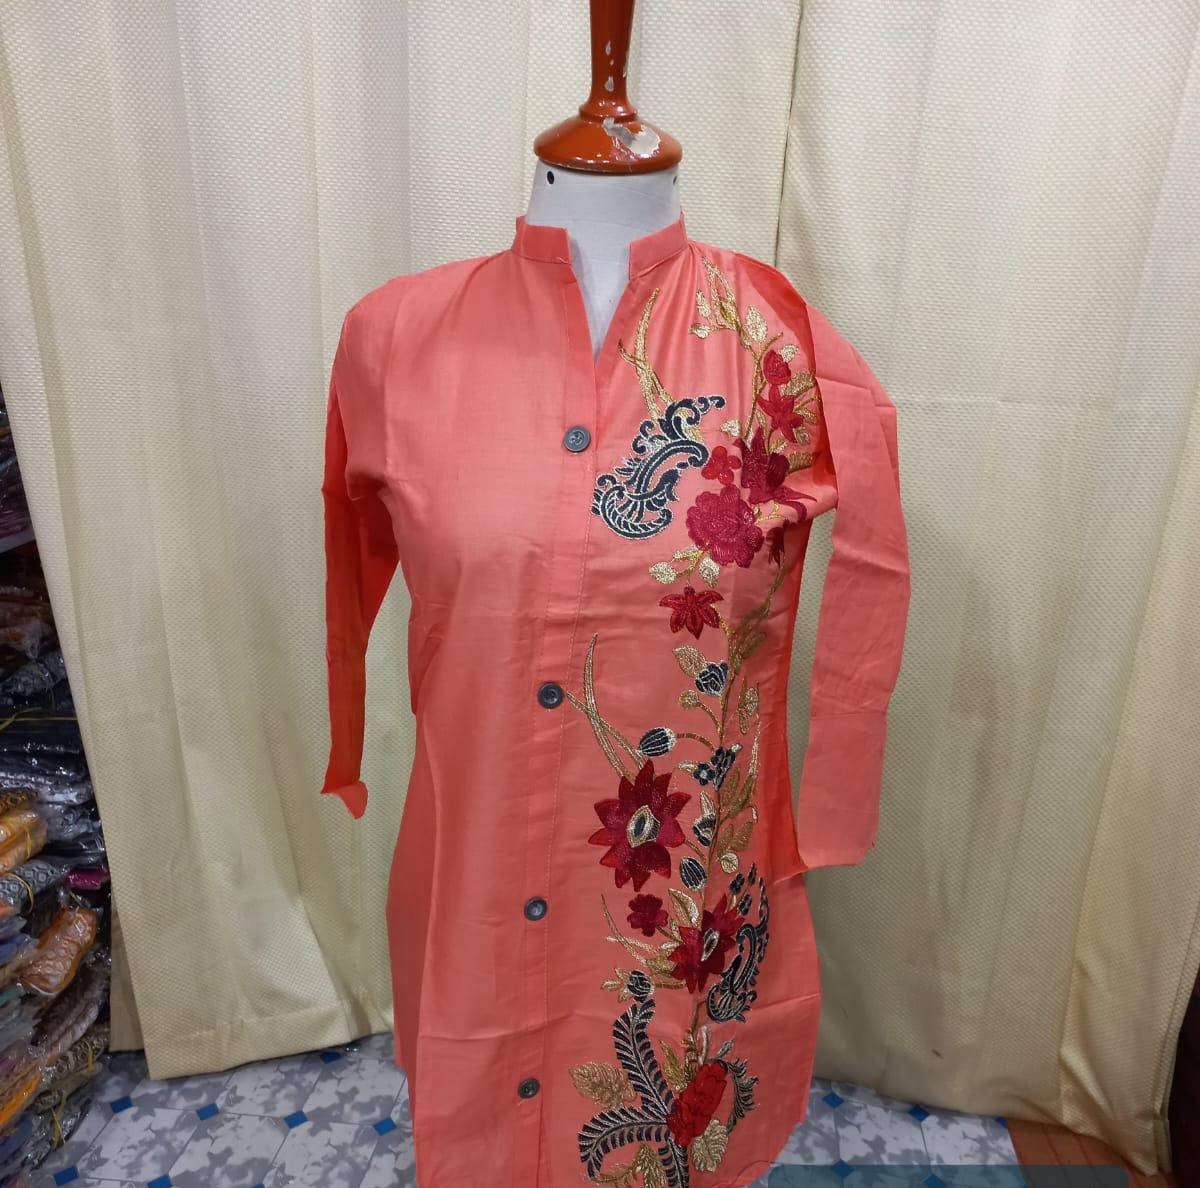  Ladies Stitched Shirt in Pakistan 